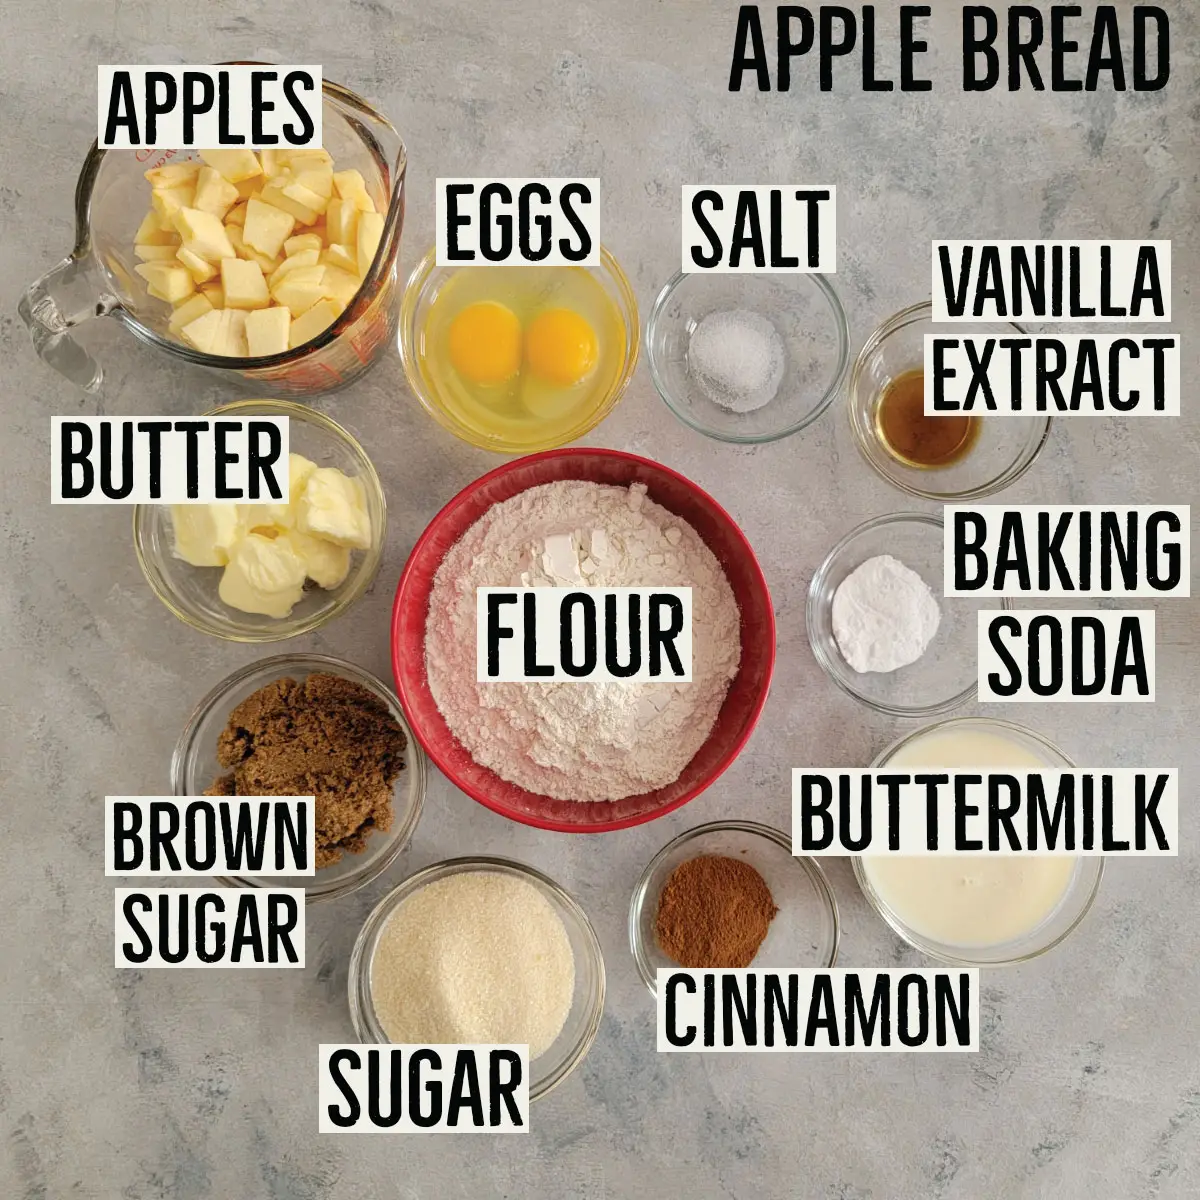 Apple bread ingredients labeled in prep bowls - apples, eggs, salt, vanilla extract, baking soda, buttermilk, cinnamon, sugar, brown sugar and butter.